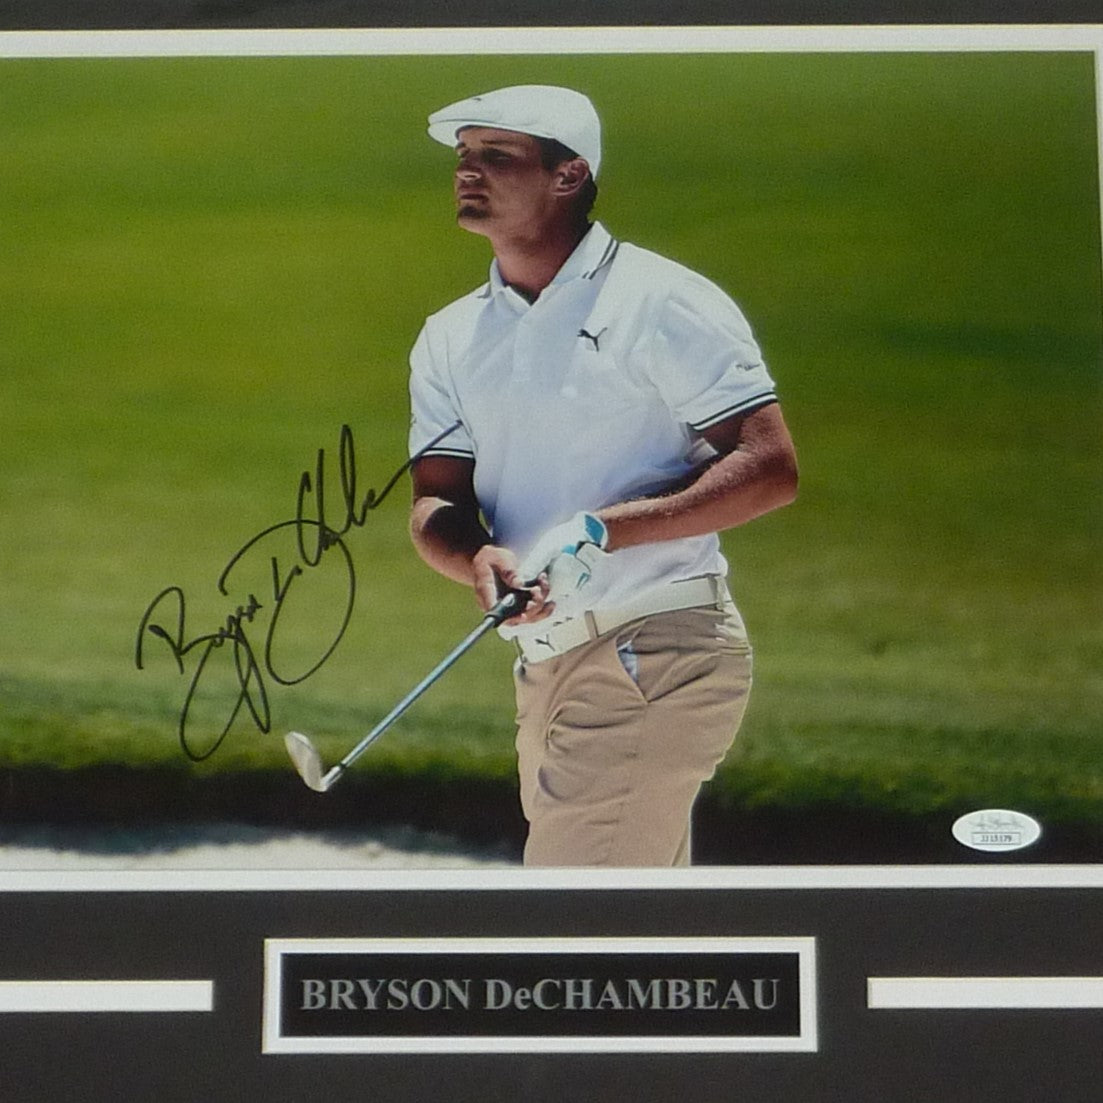 Bryson DeChambeau Autographed Golf Deluxe Framed 11x14 Photo - JSA